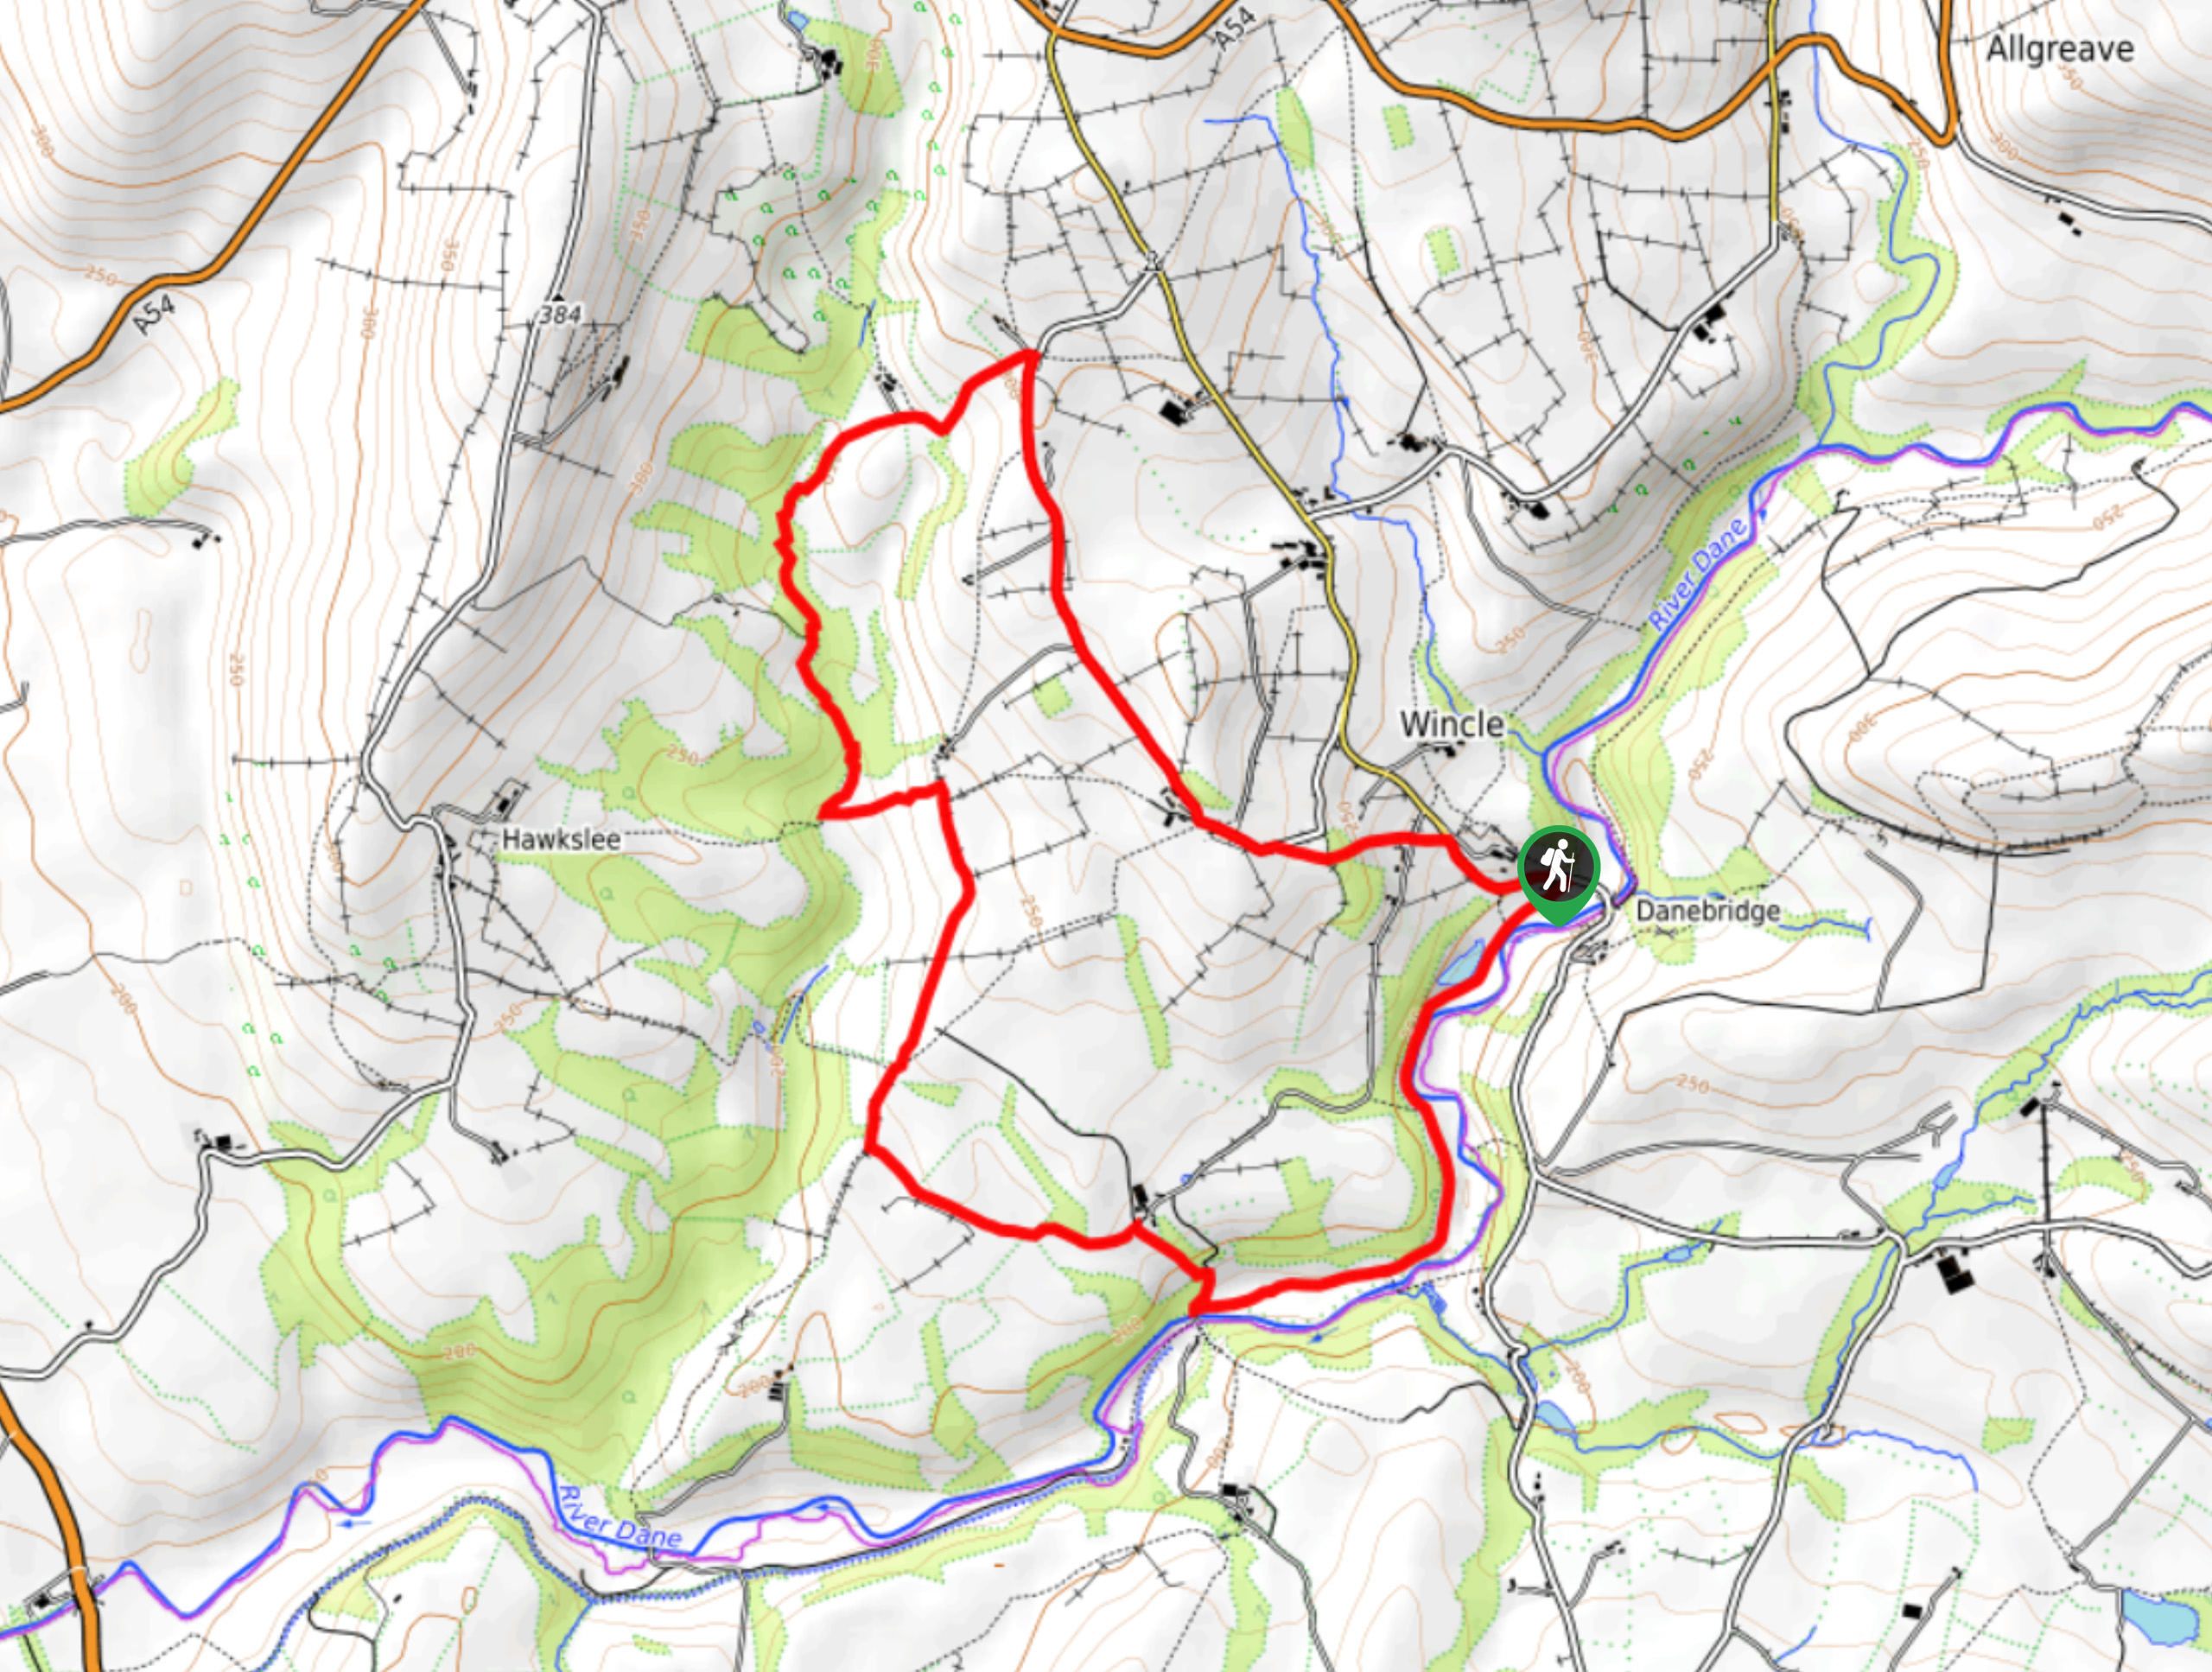 Rookery Wood Walk Map